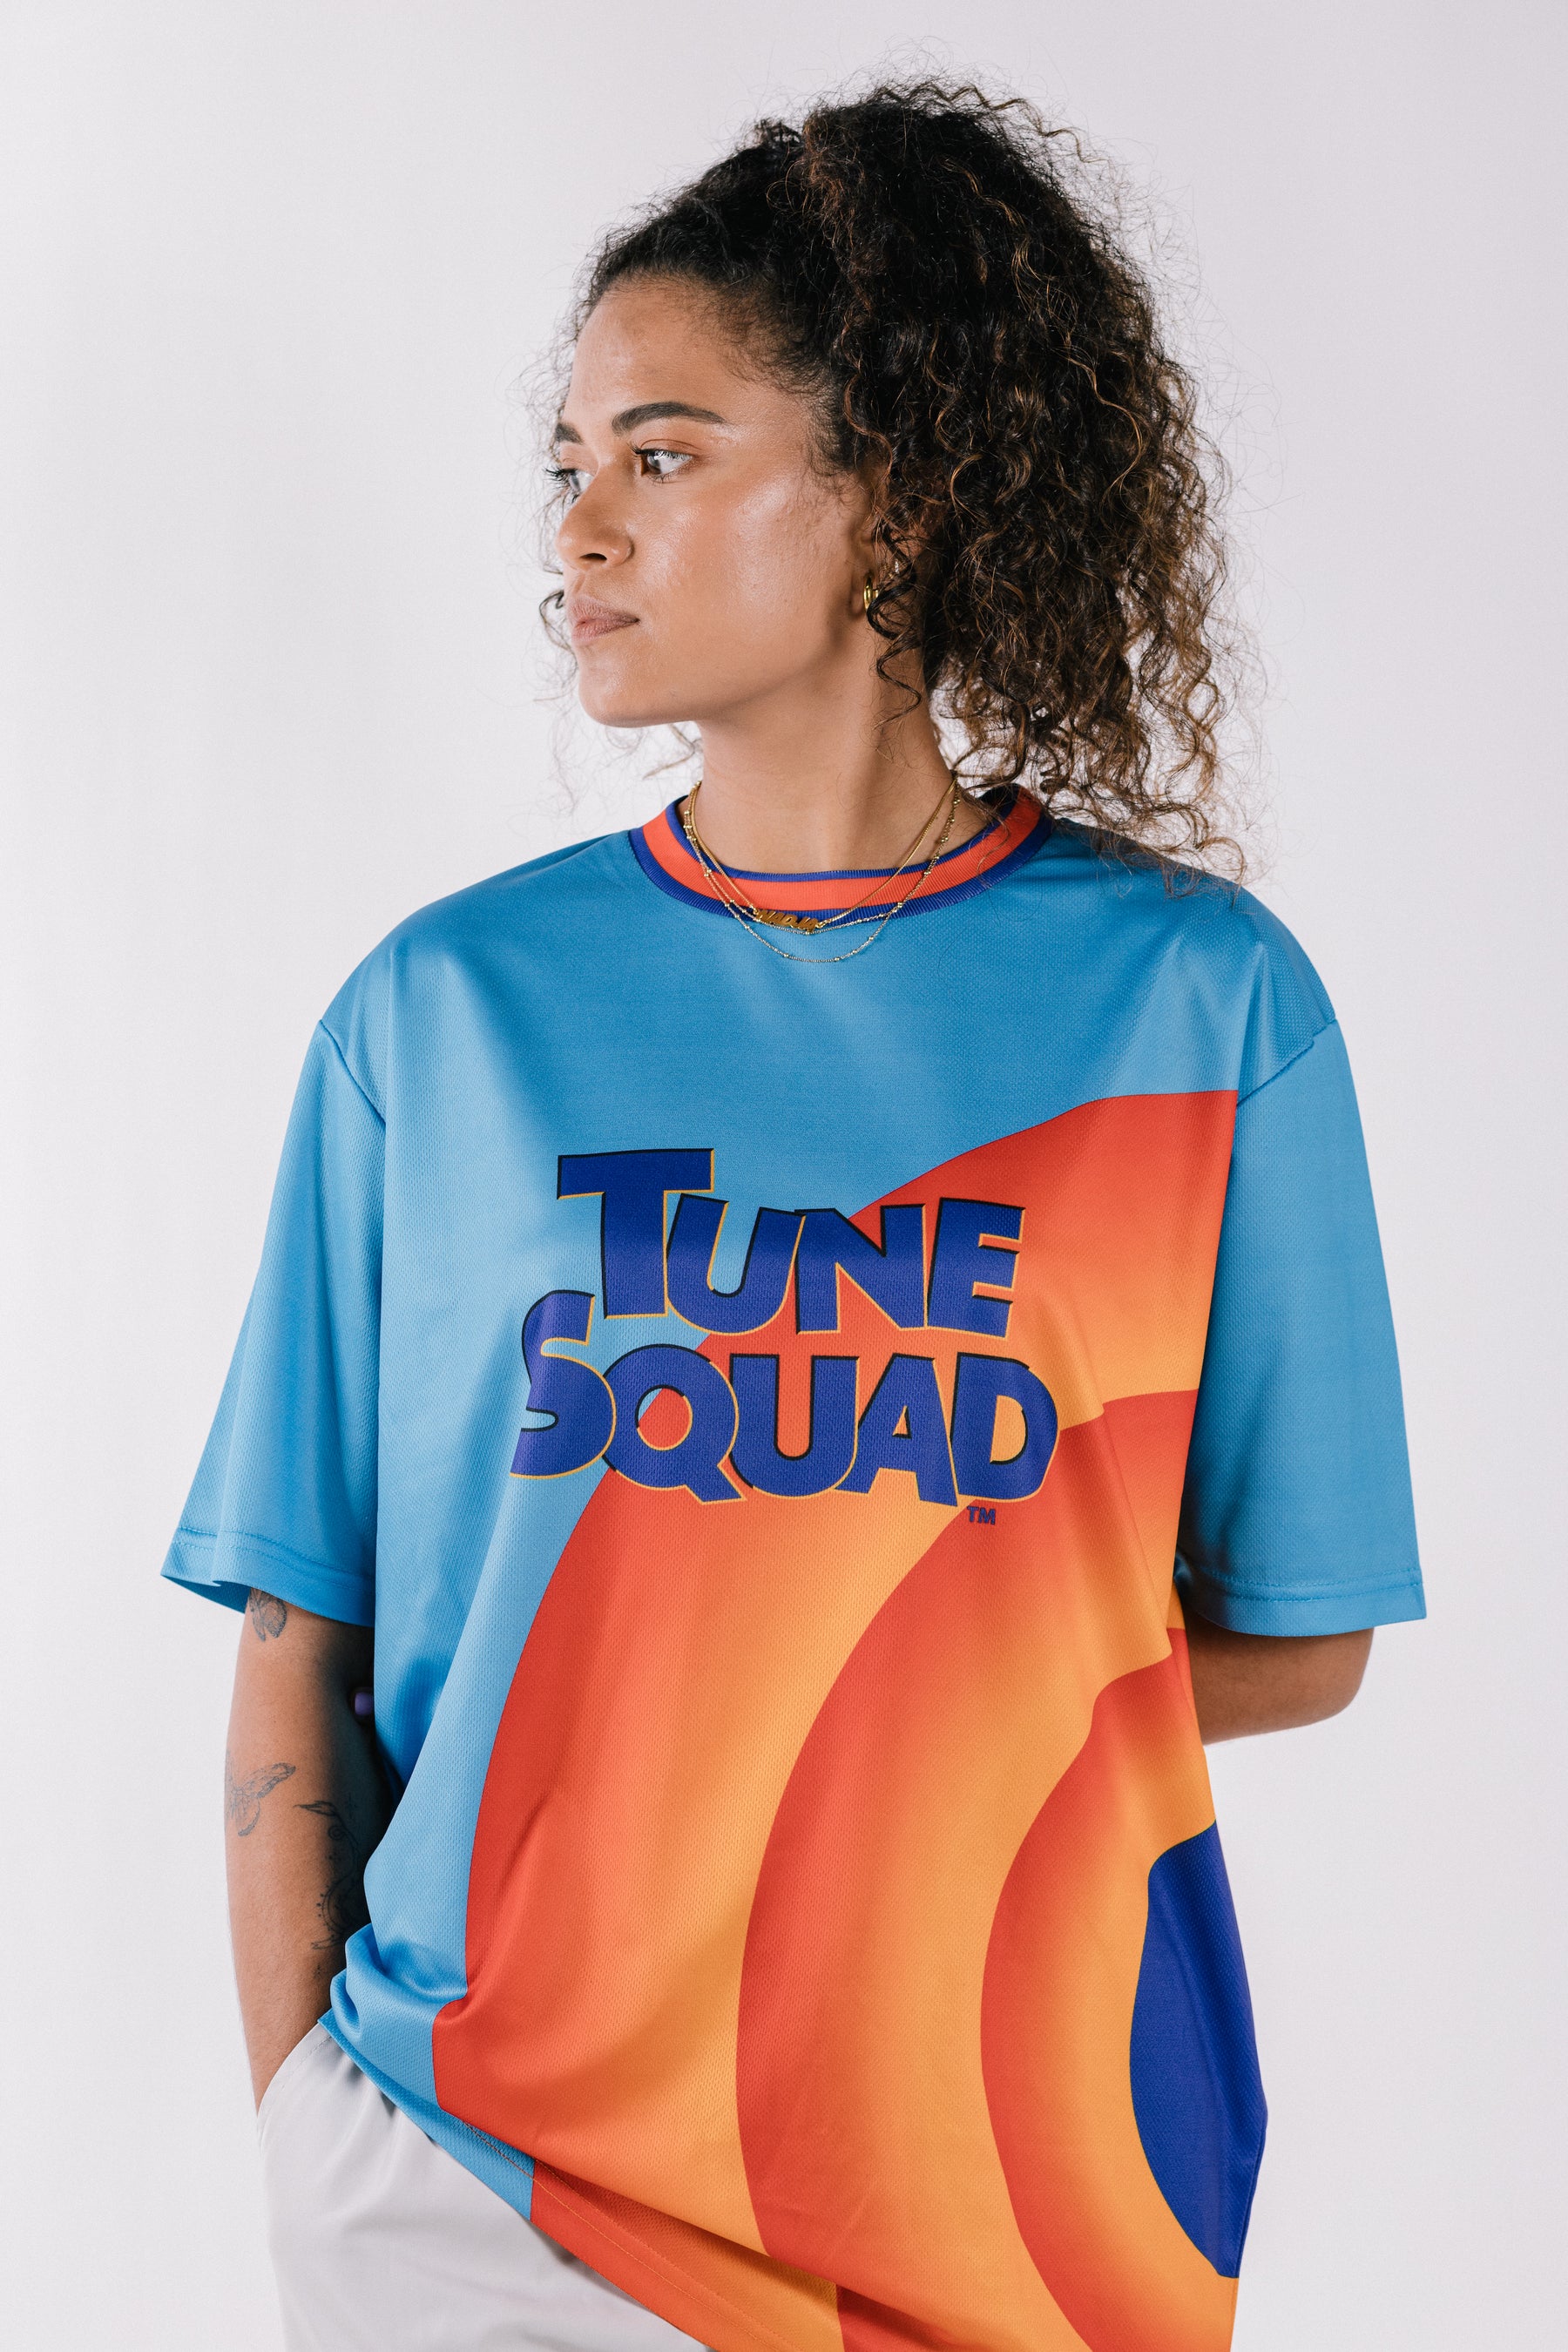 Tune Squad Jersey Blue